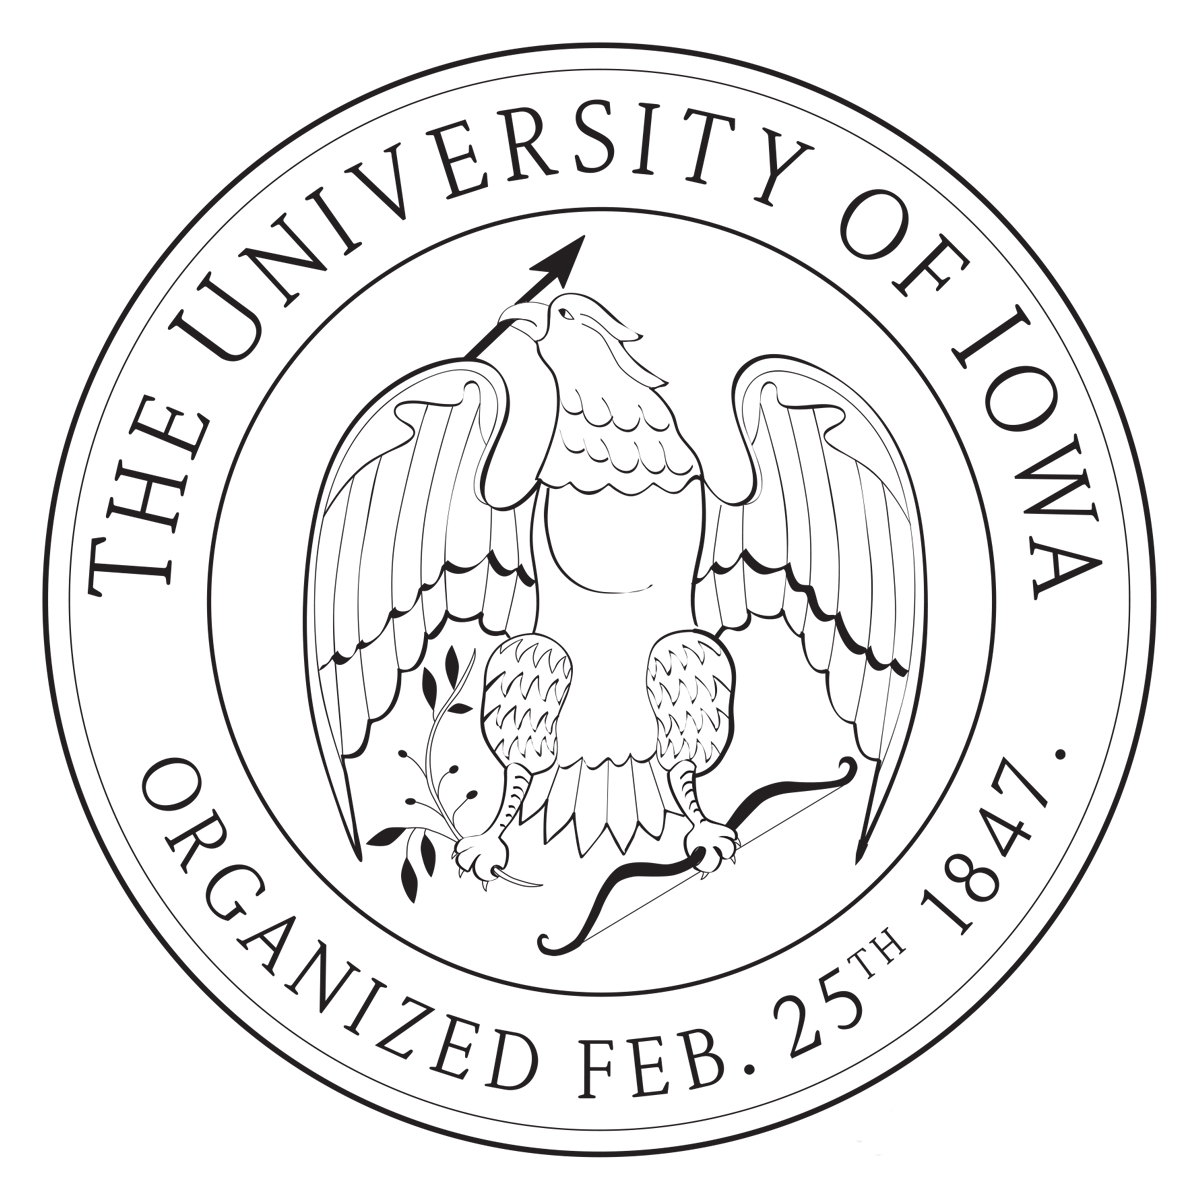 Image of the University of Iowa seal